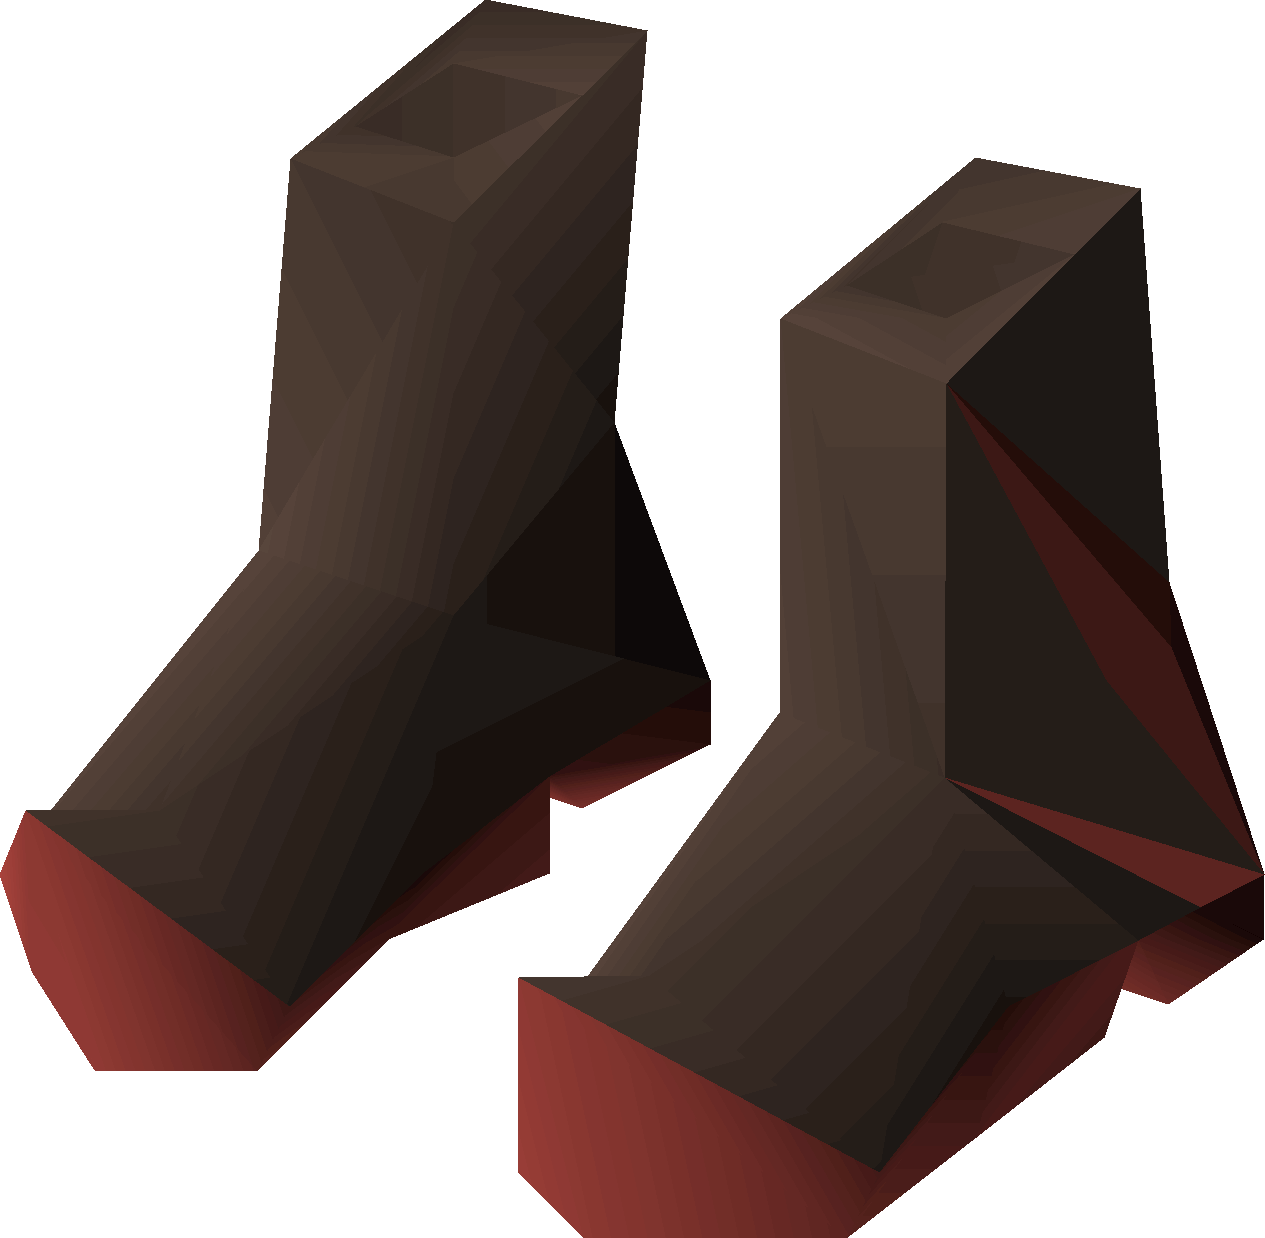 Bloodbark boots